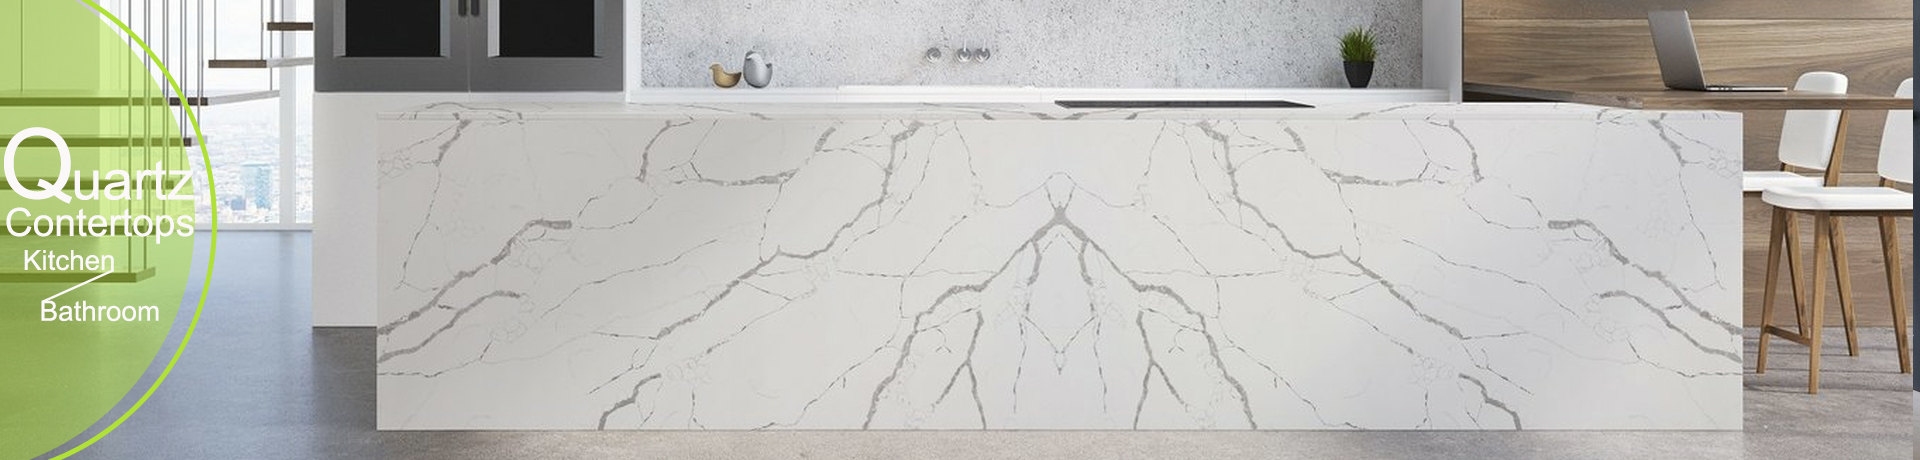 Quartz Kitchen and Bathroom Vanity Countertops from Perfect Stone